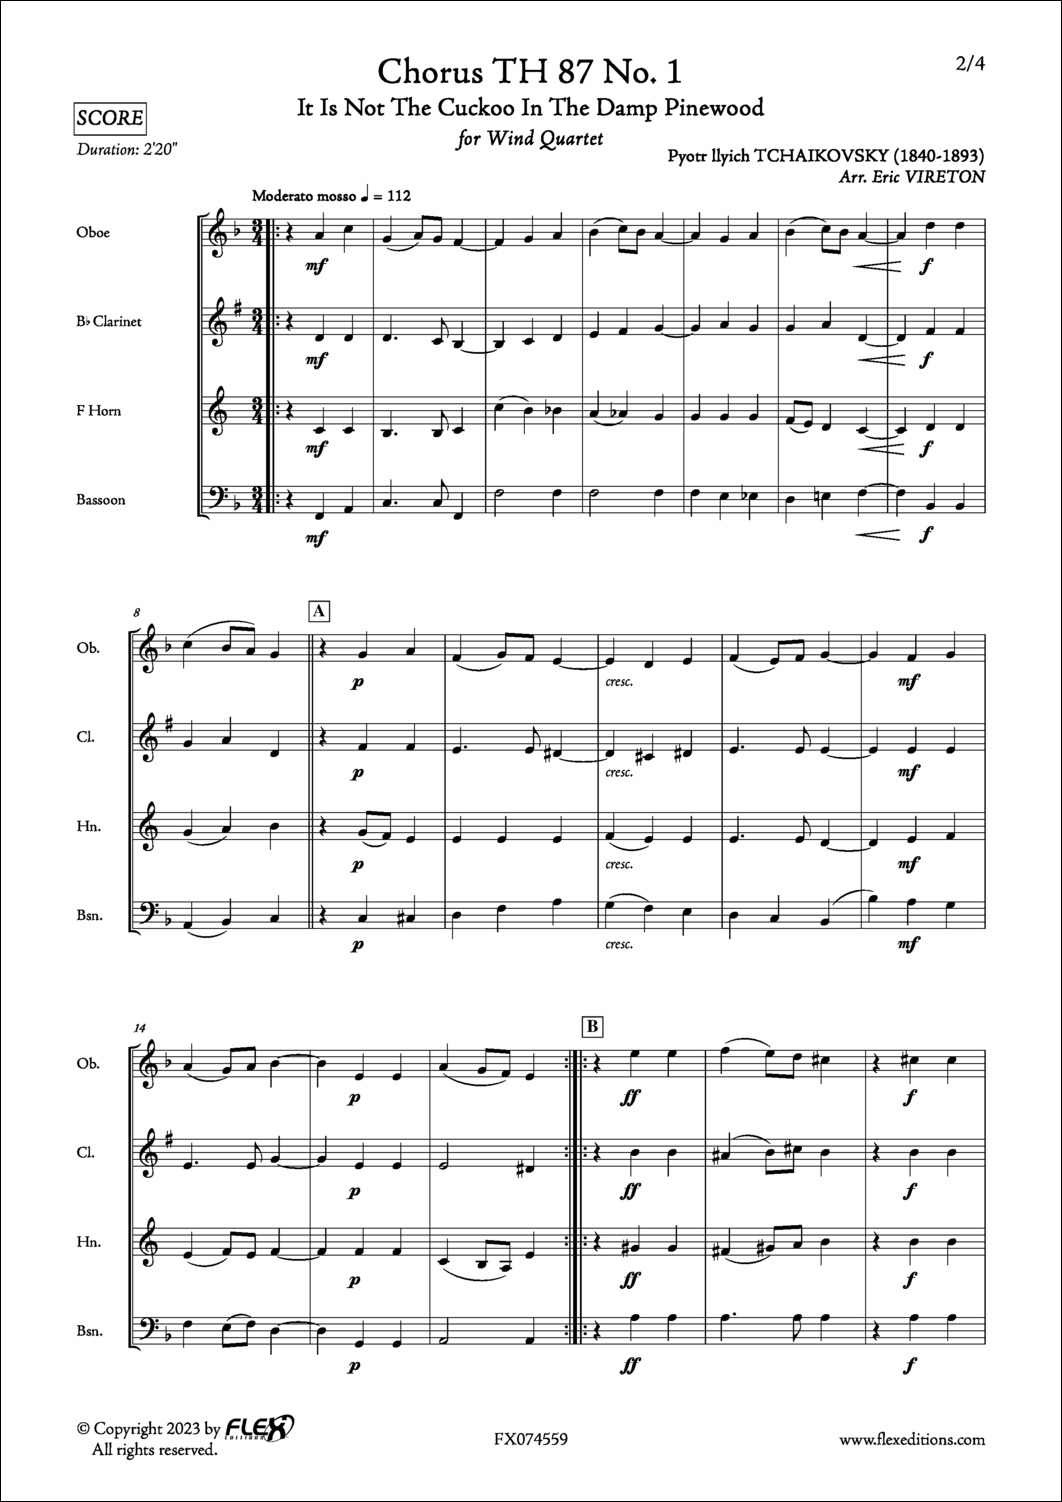 Chorus TH 87 No. 1 - P. I. TCHAIKOVSKY - <font color=#666666>Wind Quartet</font>